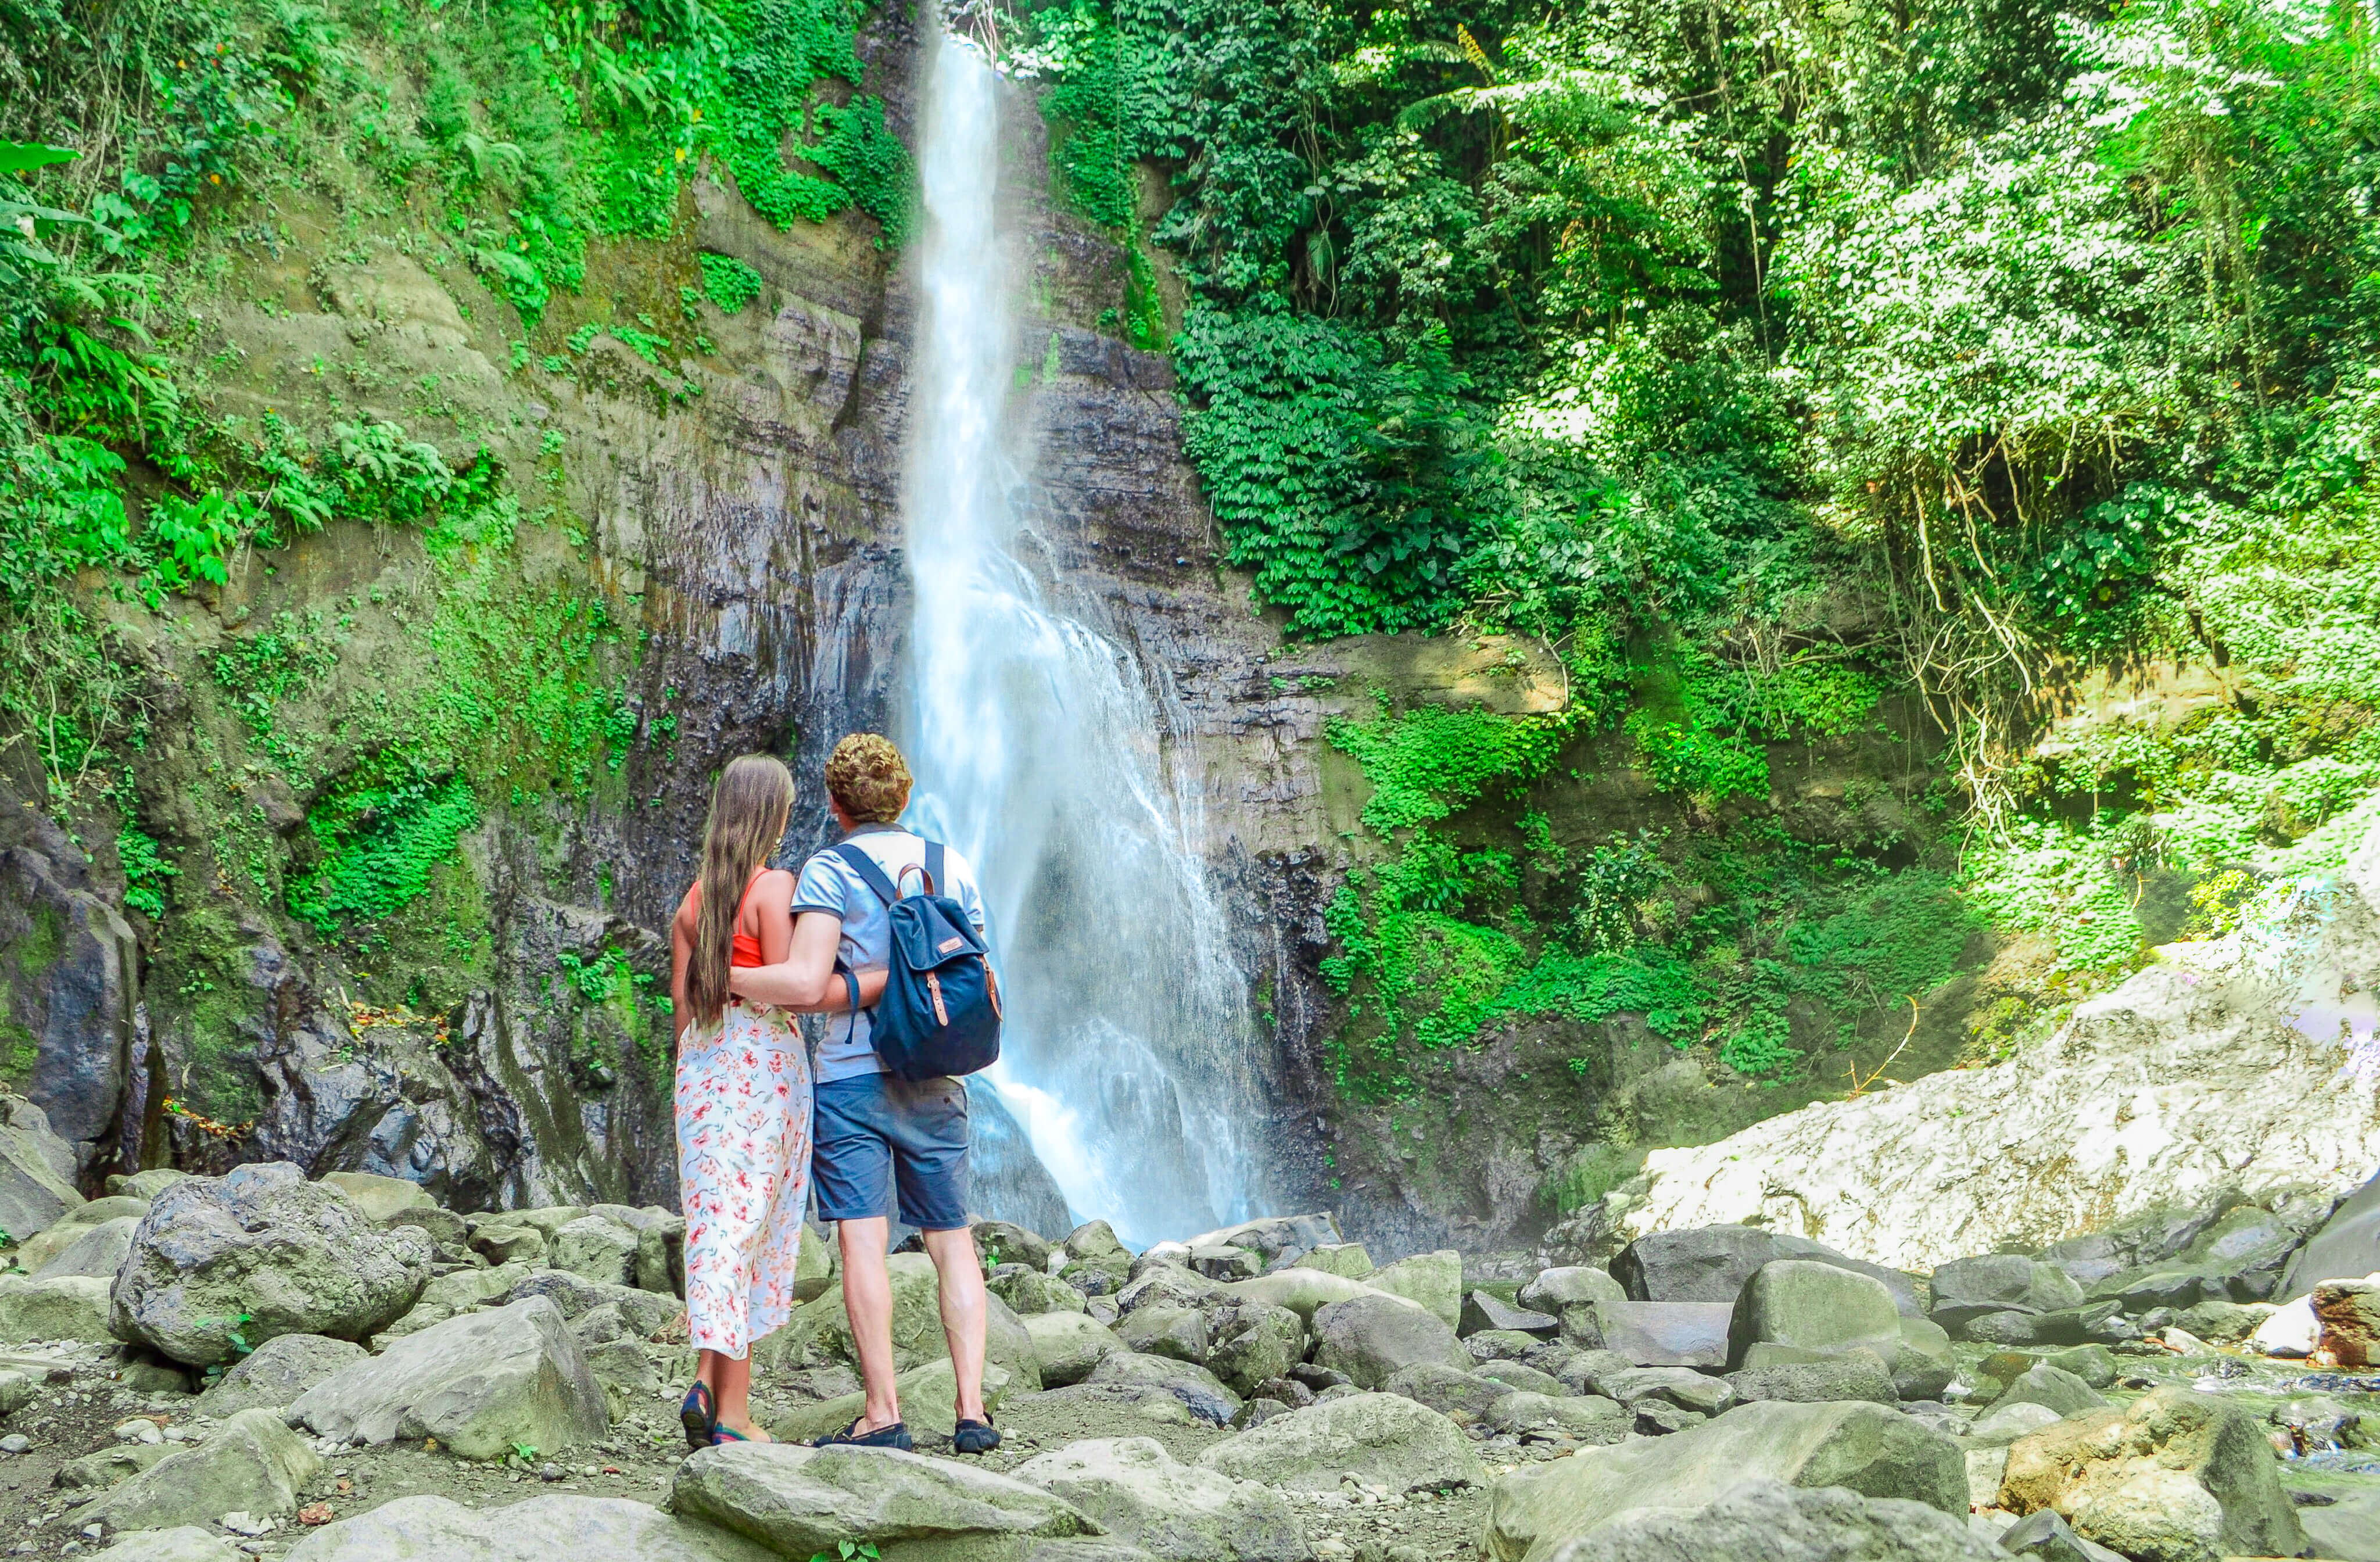 Bali Golden Tour - Gitgit waterfall in Northern Bali, Indonesia